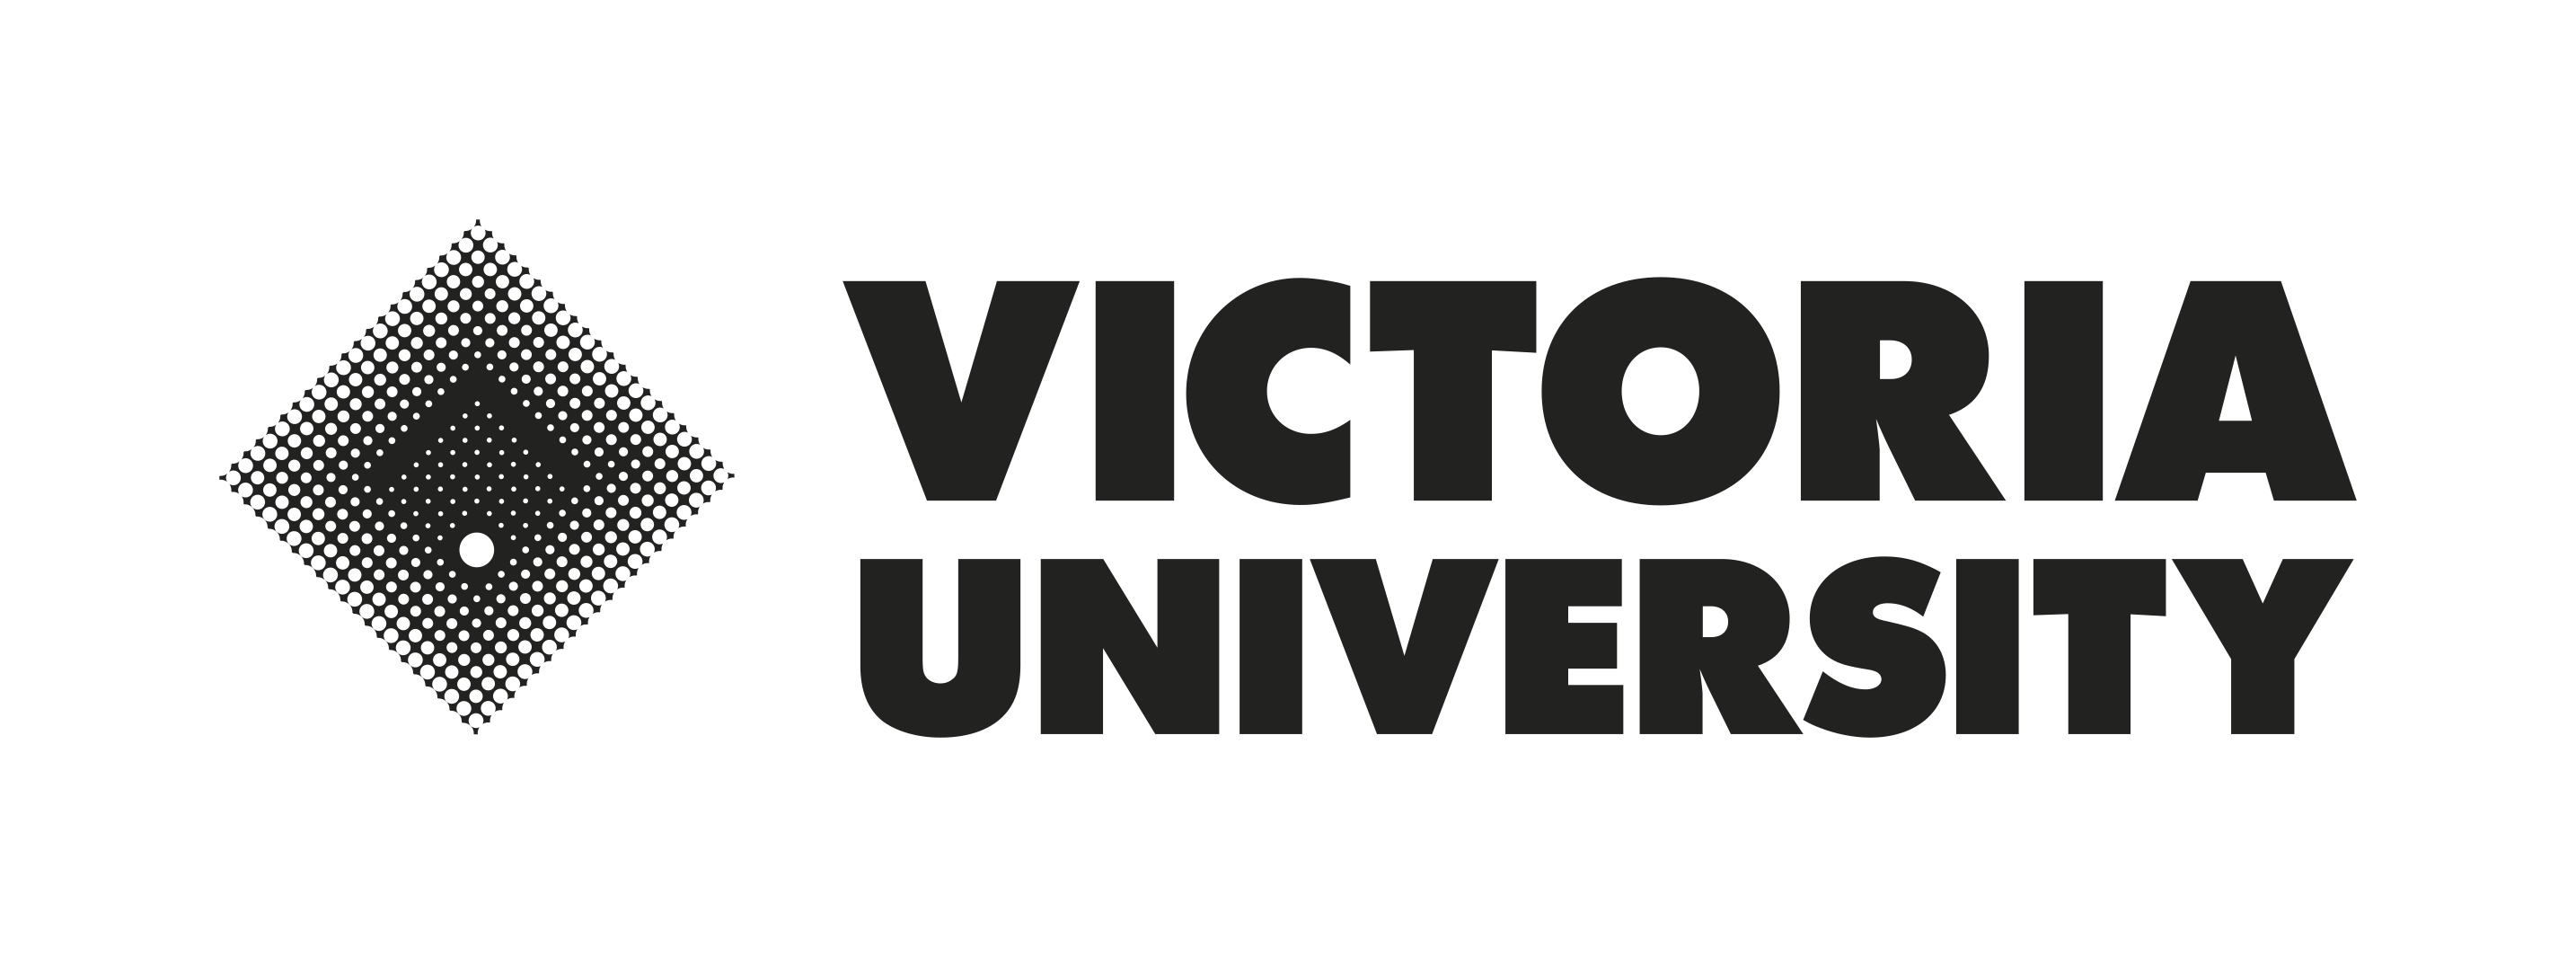 Victoria-University-Logo.png